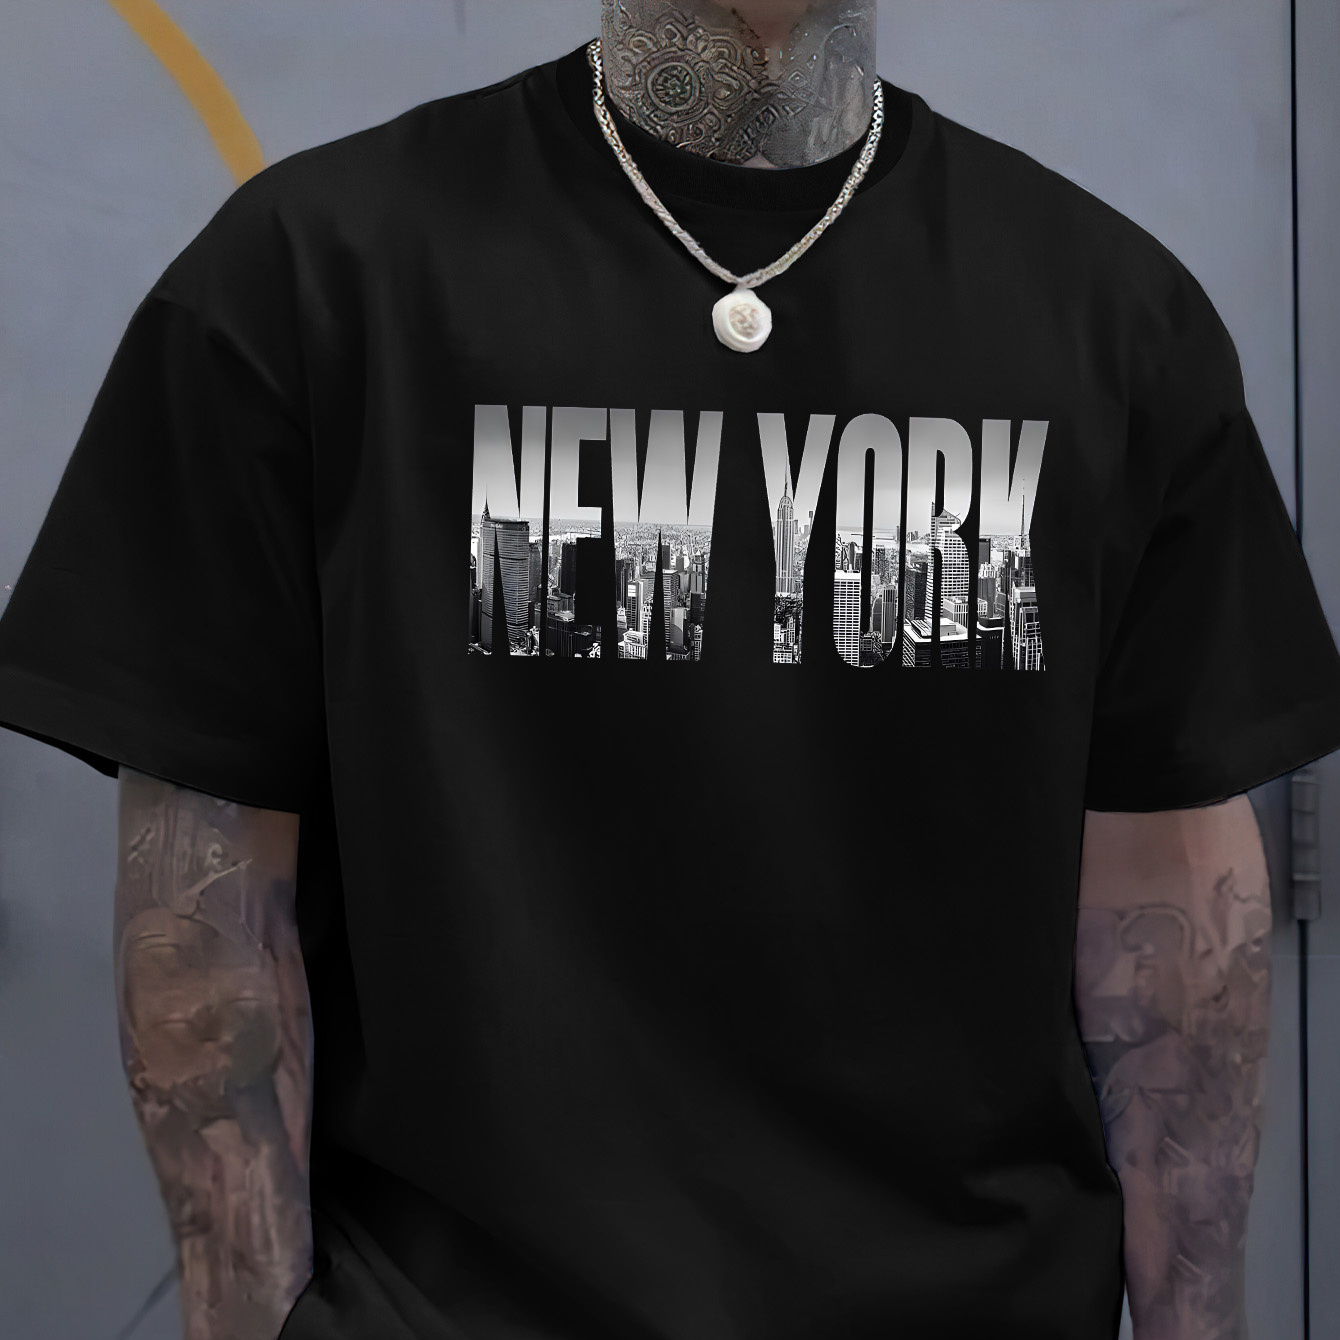 

Men's Casual Versatile Summer T-shirt - New York & City Landscape Print Short Sleeve Crew Neck Comfy Tees As Gift